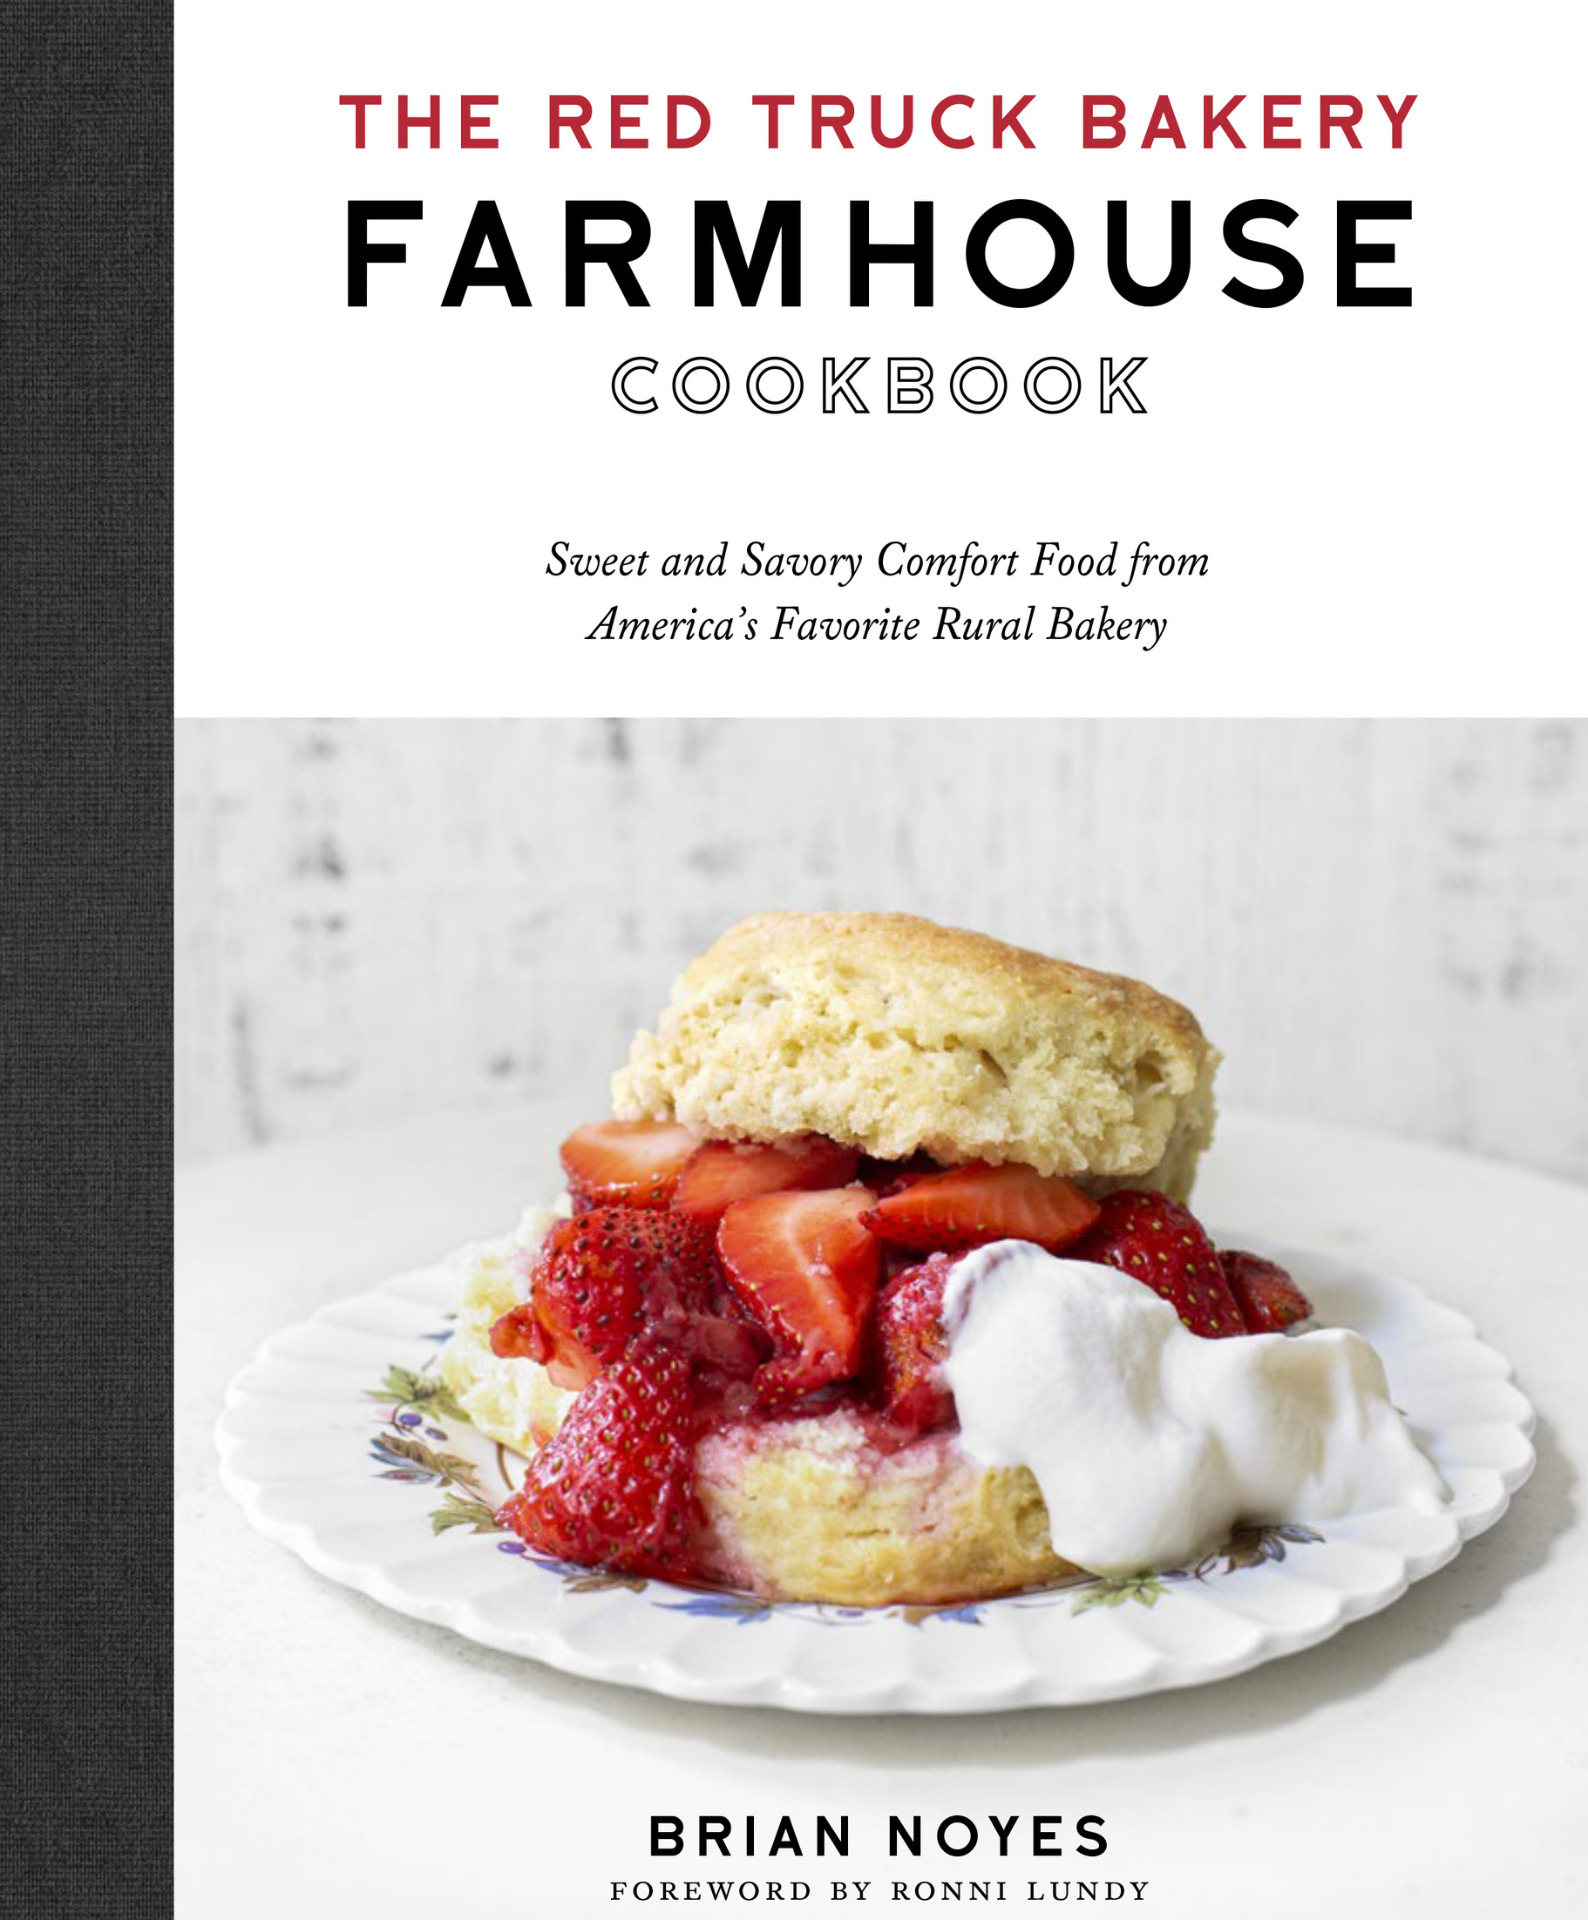 Farmhouse cookbook